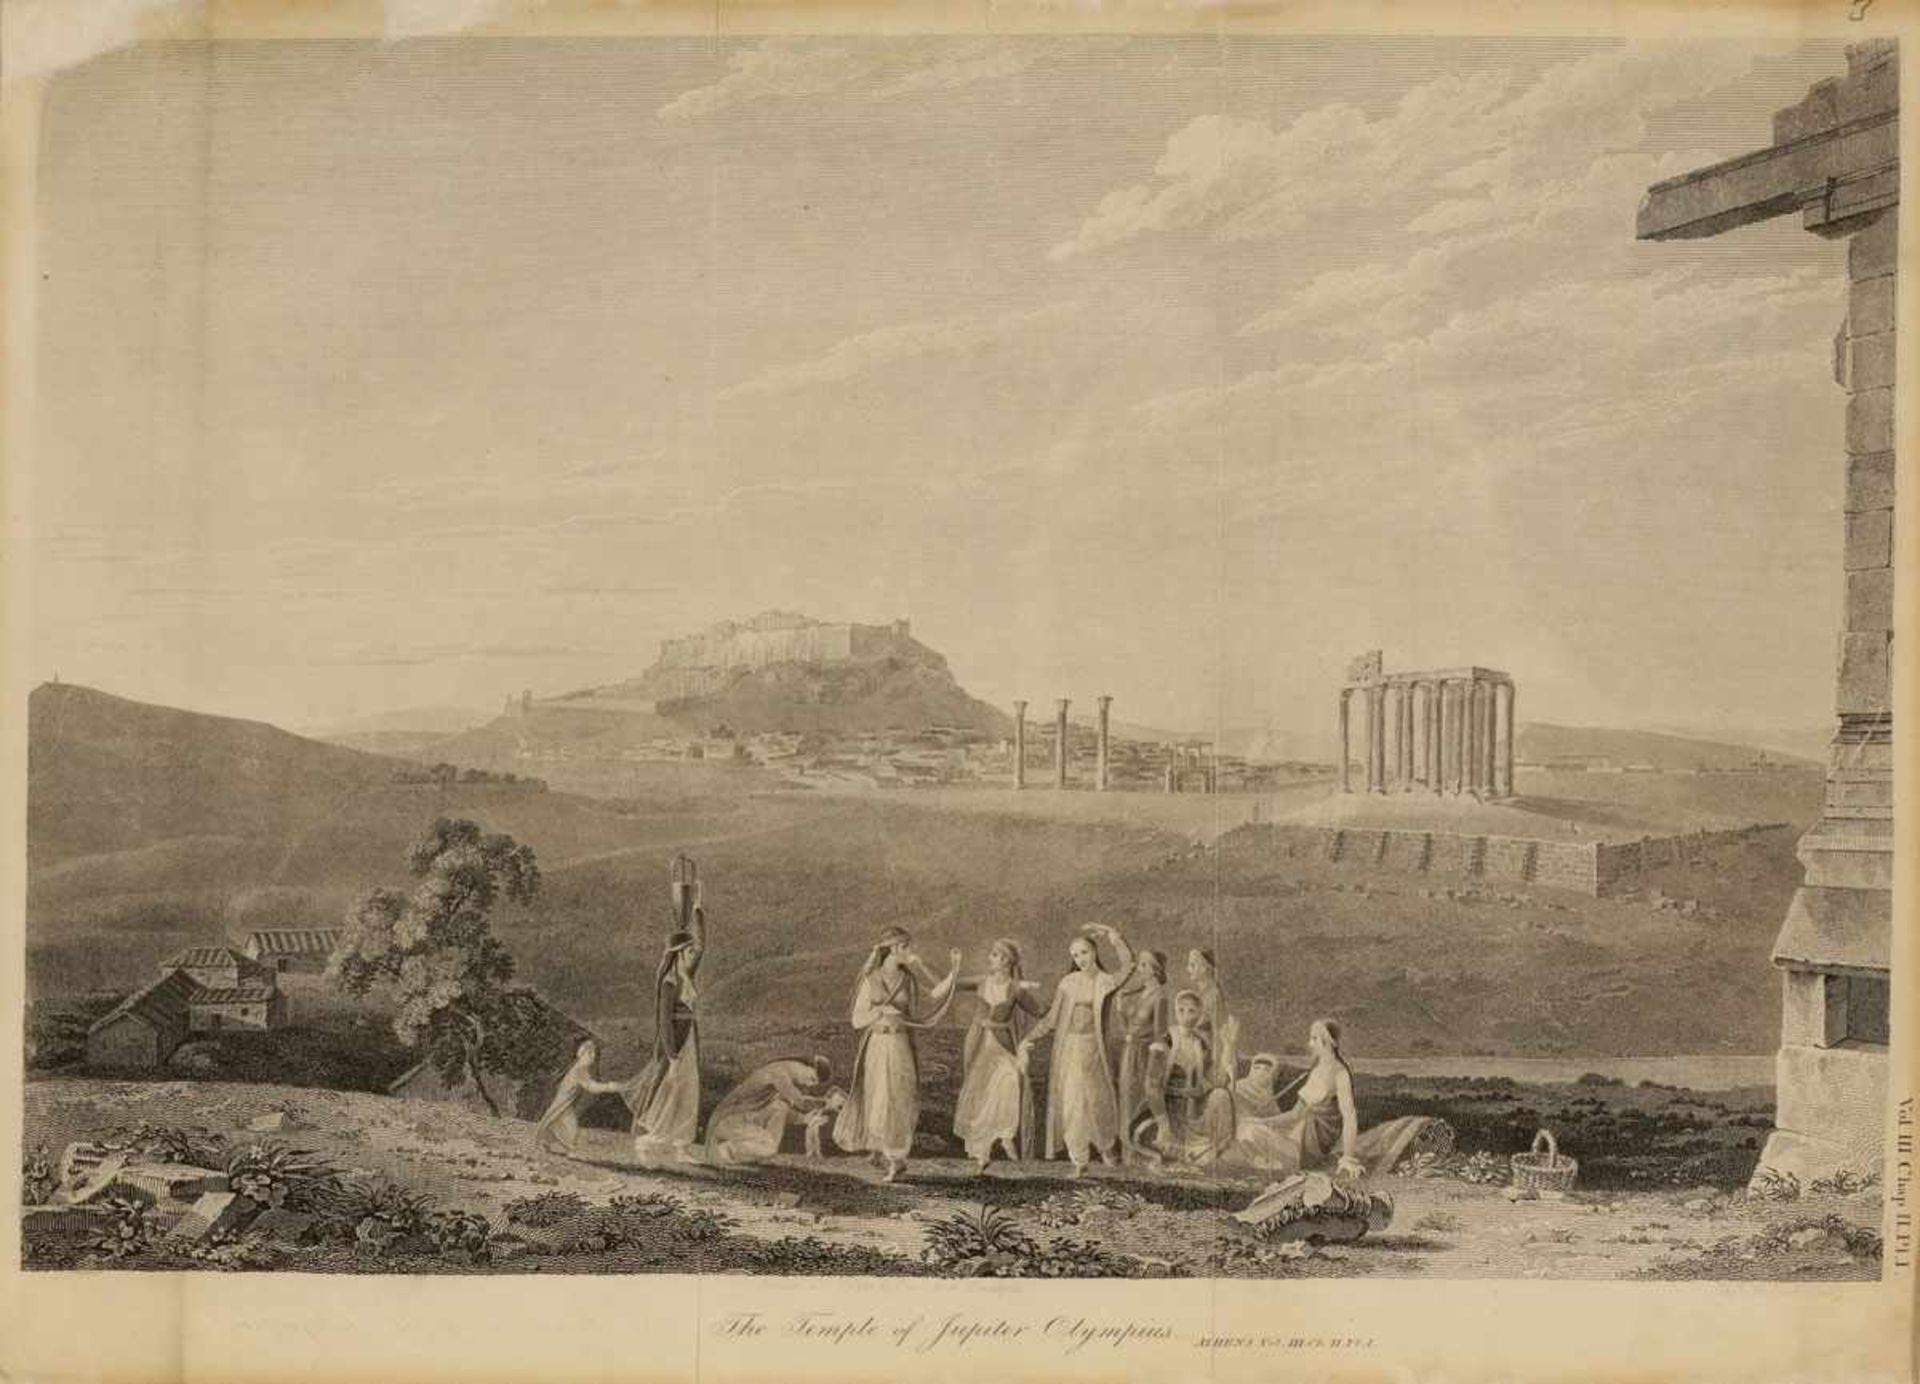 Thomas Medlandca. 1765 - 1833 nach - "The Temple of Jupiter Olympius" - Kupferstich. Falze. 30 x